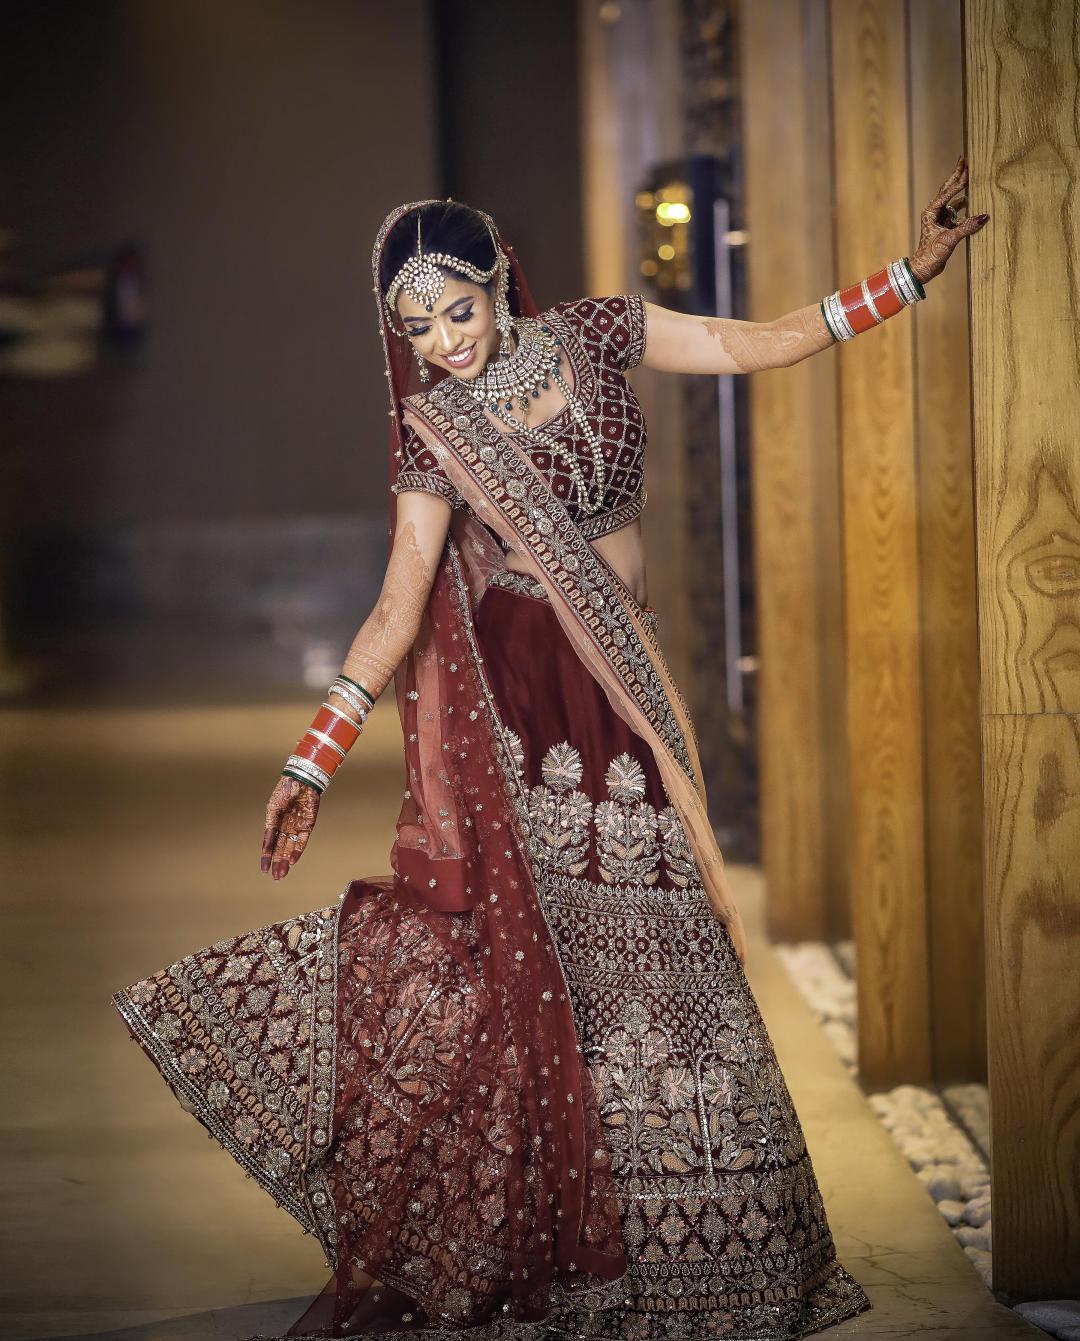 Bridal Dupatta Hiding the face Professional Bengali Wedding Photography  Poses Archives - myMandap